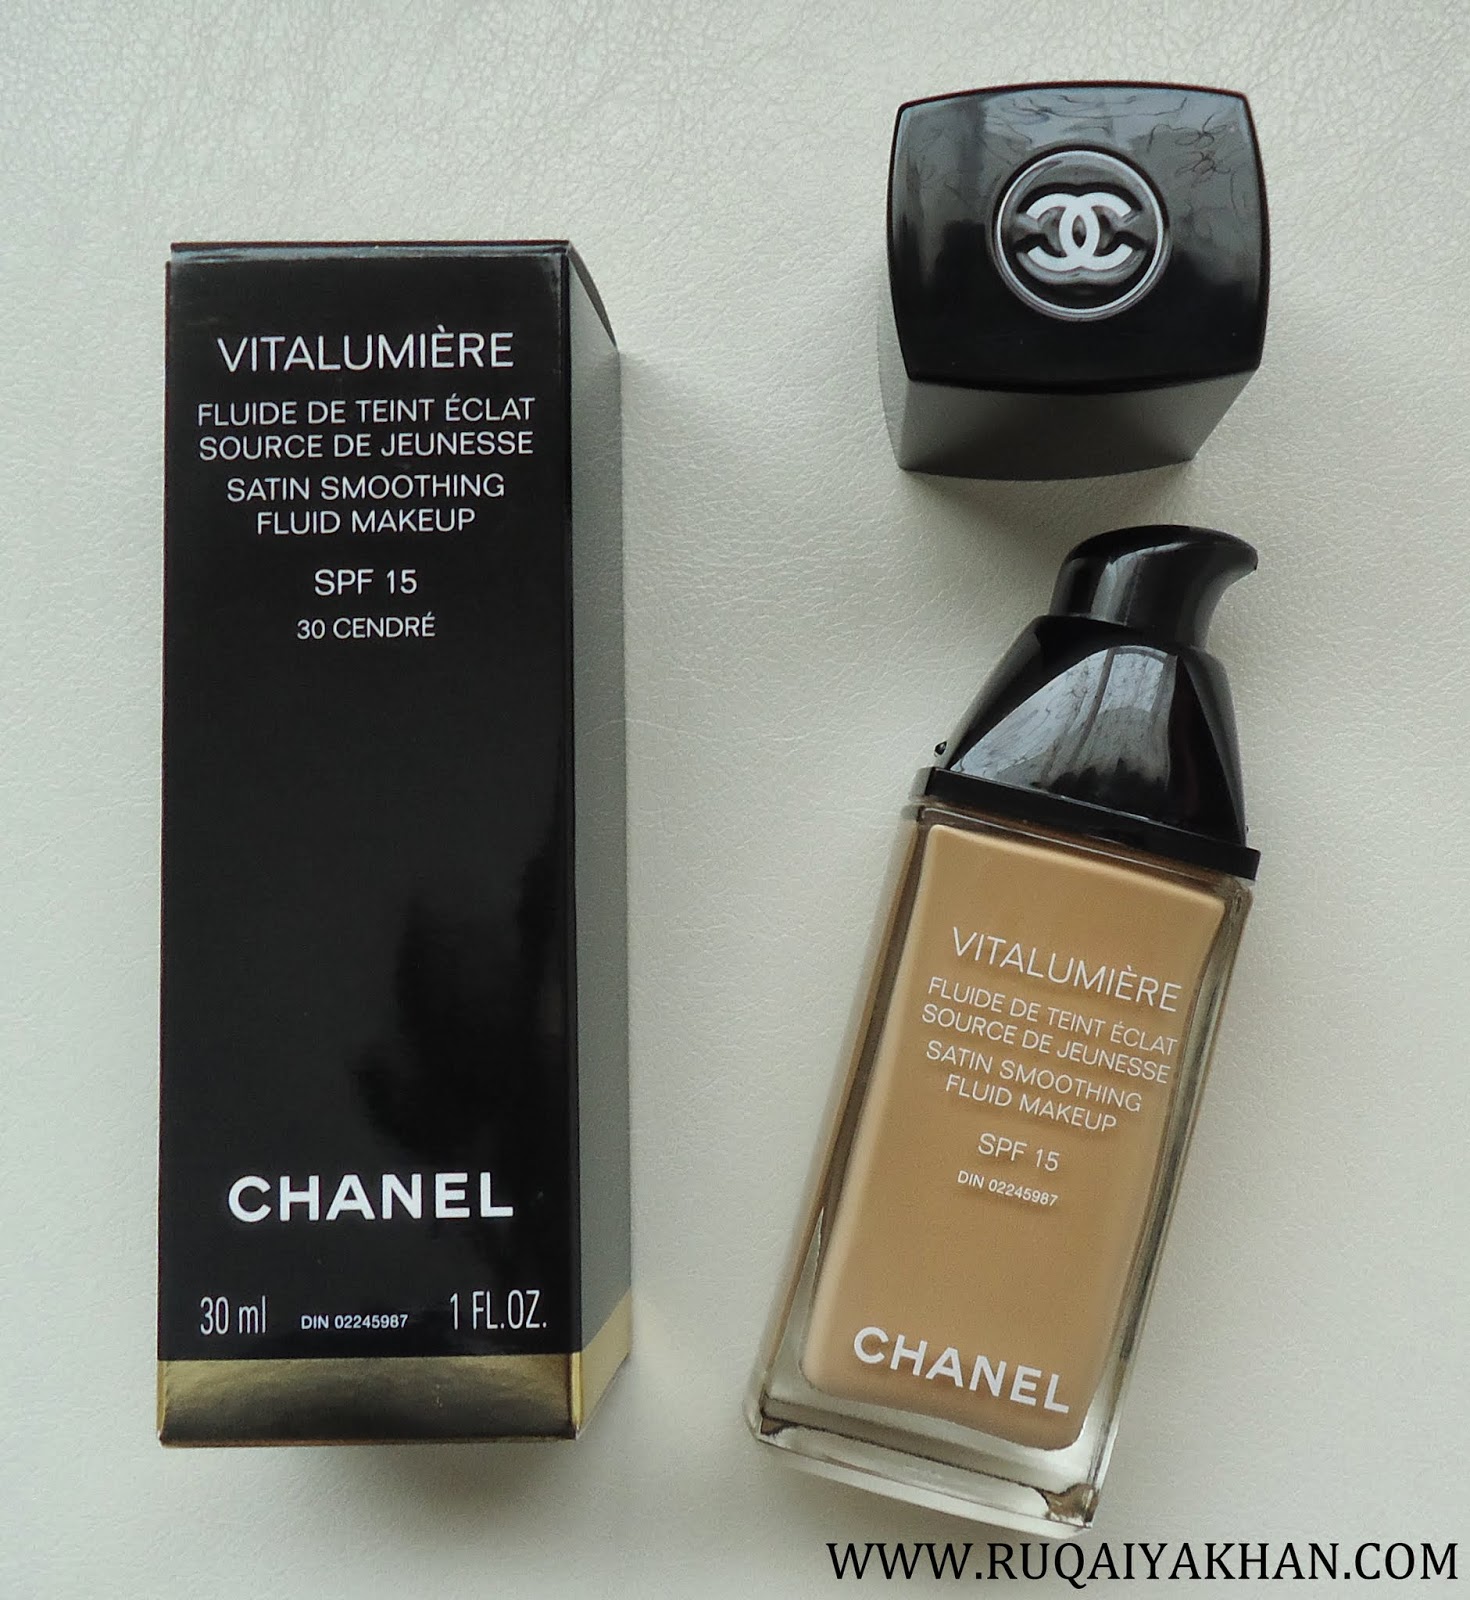 Chanel Vitalumière Satin Smoothing Fluid Makeup (foundation) & Le